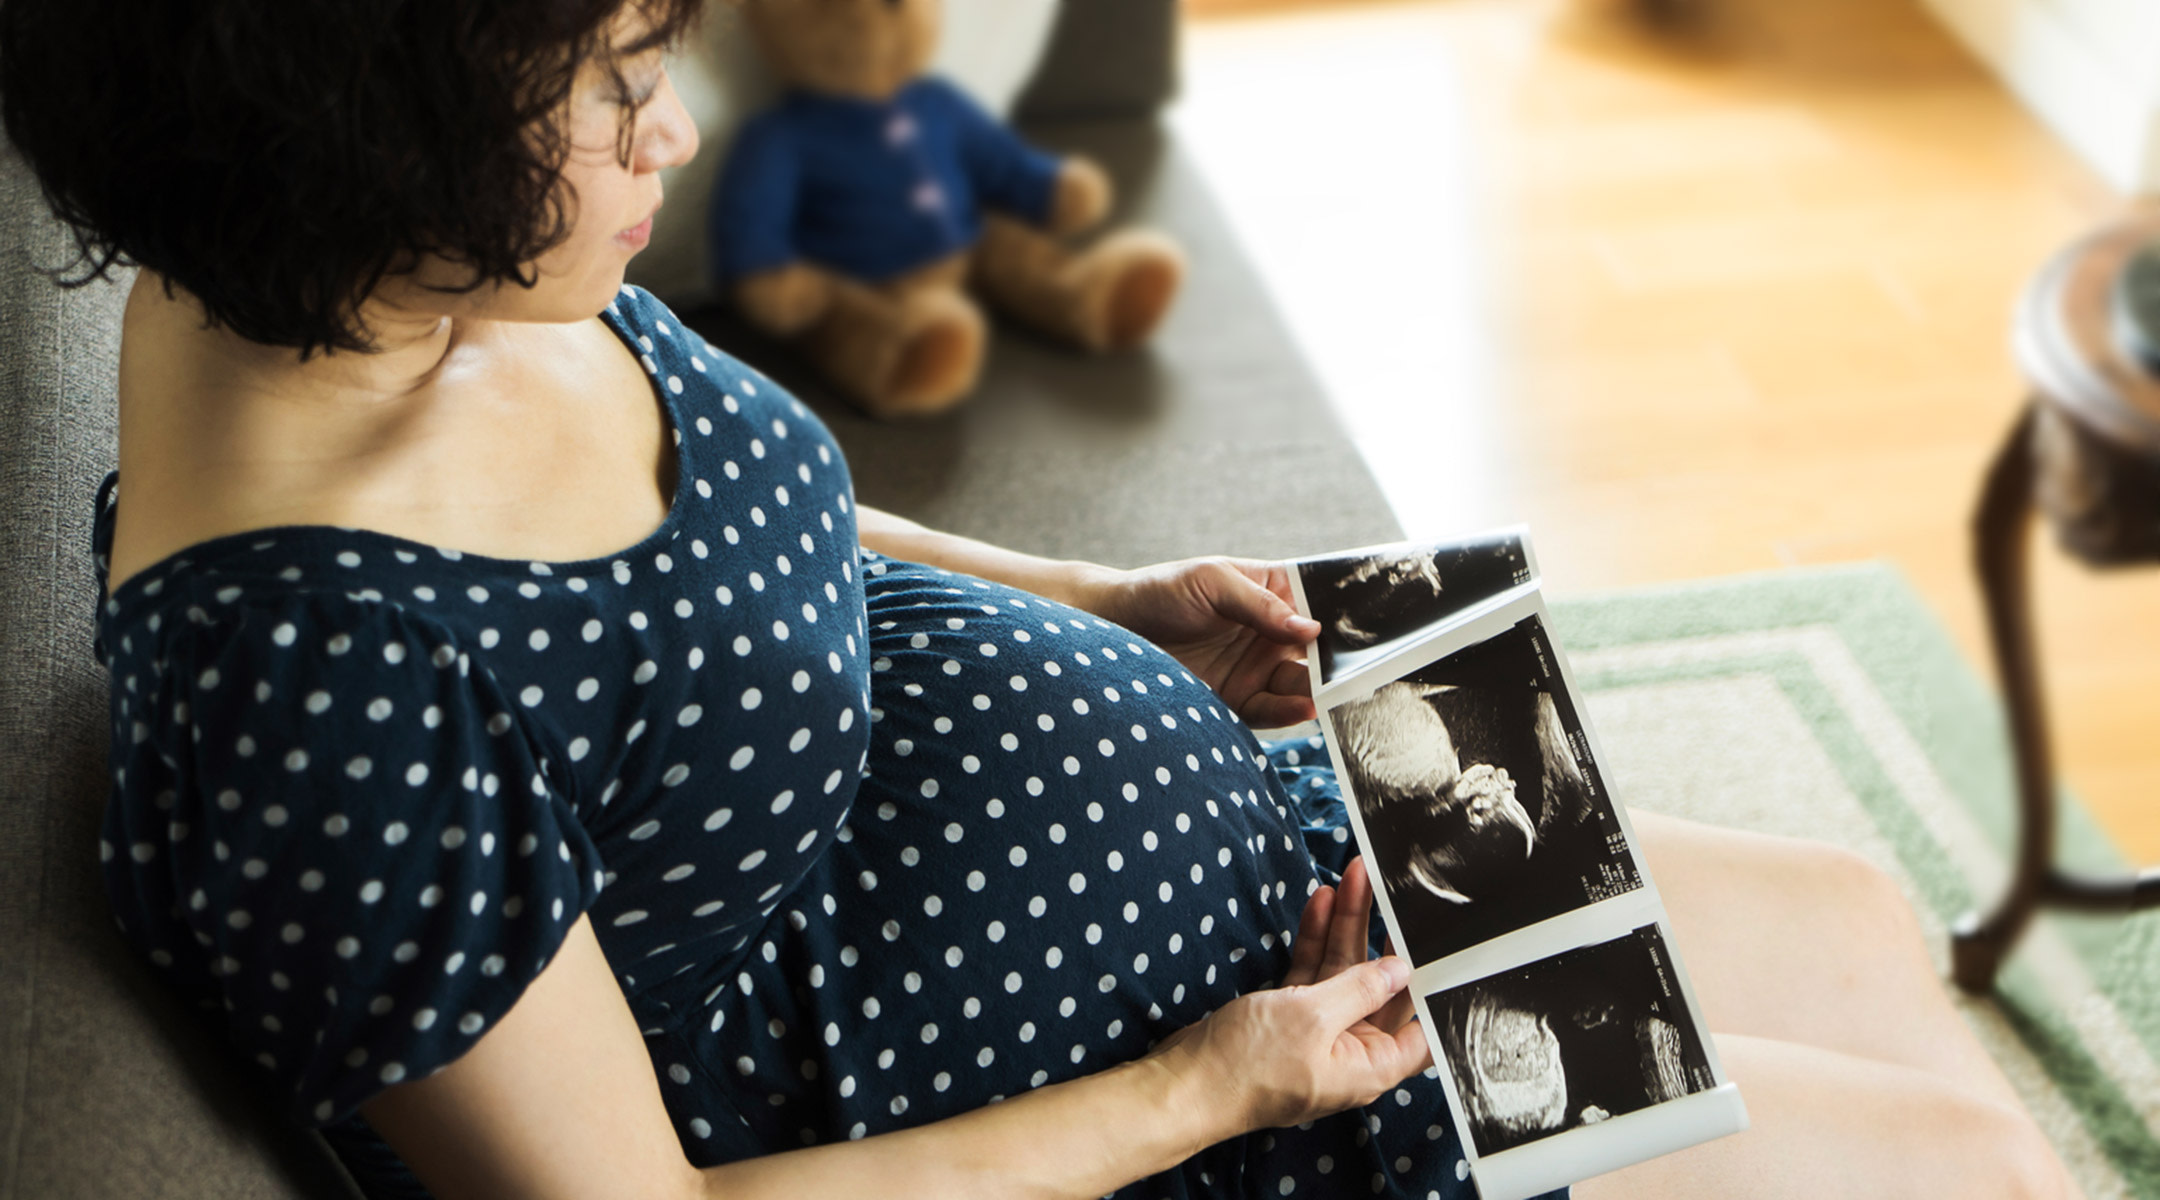 pregnant woman looking at sonogram